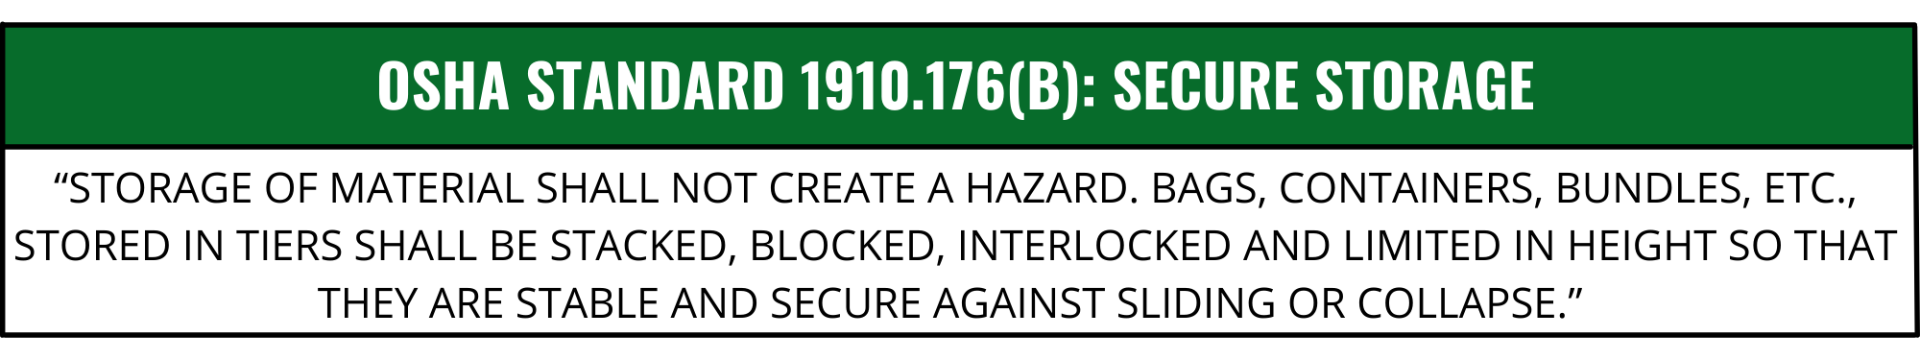 OSHA Standard 1910.176(b): Secure storage